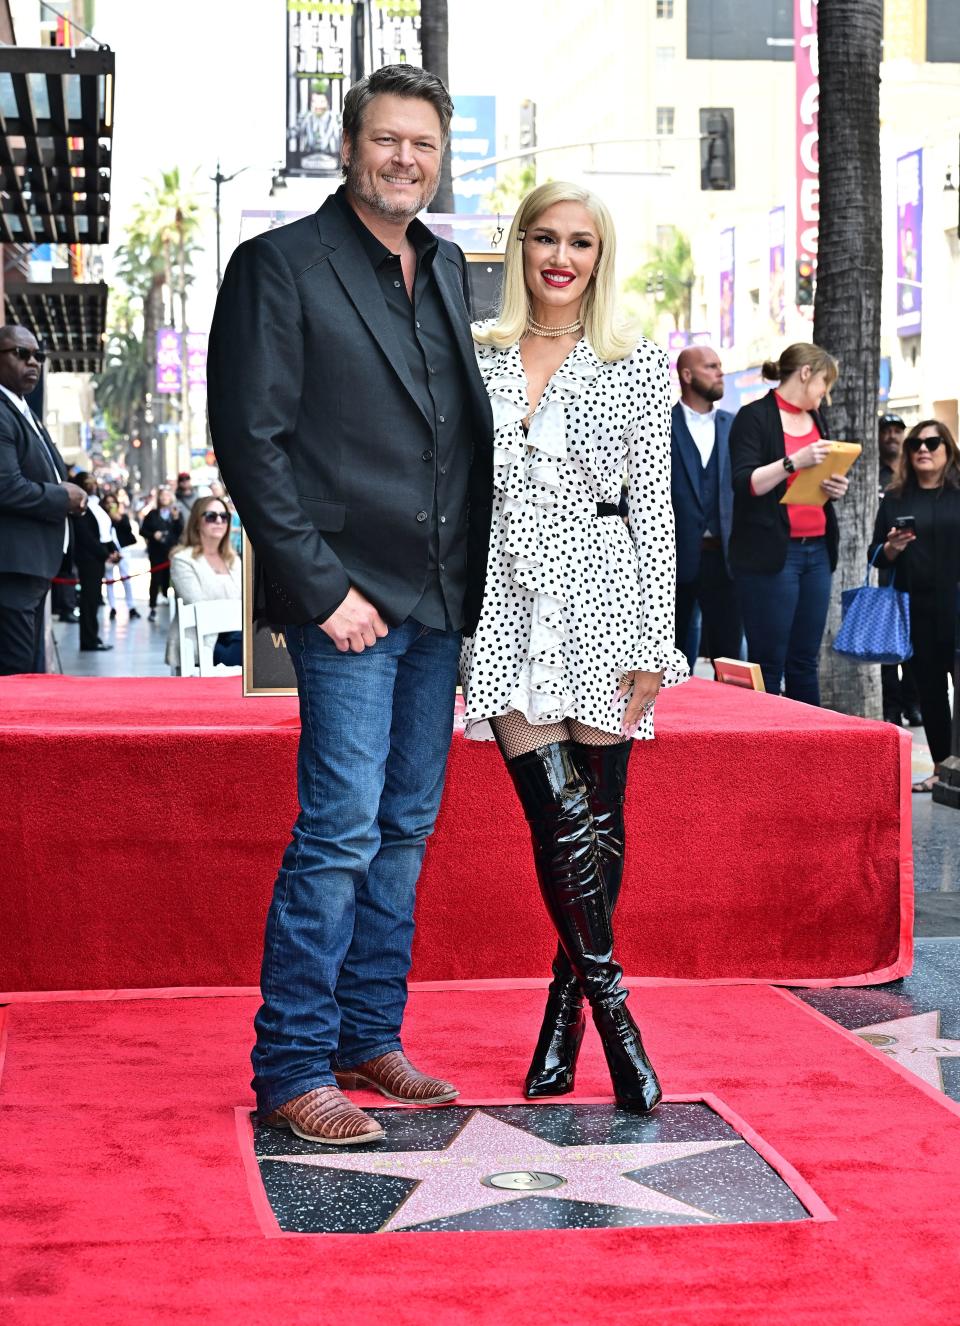 Blake Shelton and Gwen Stefani at his Hollywood Walk of Fame star ceremony.